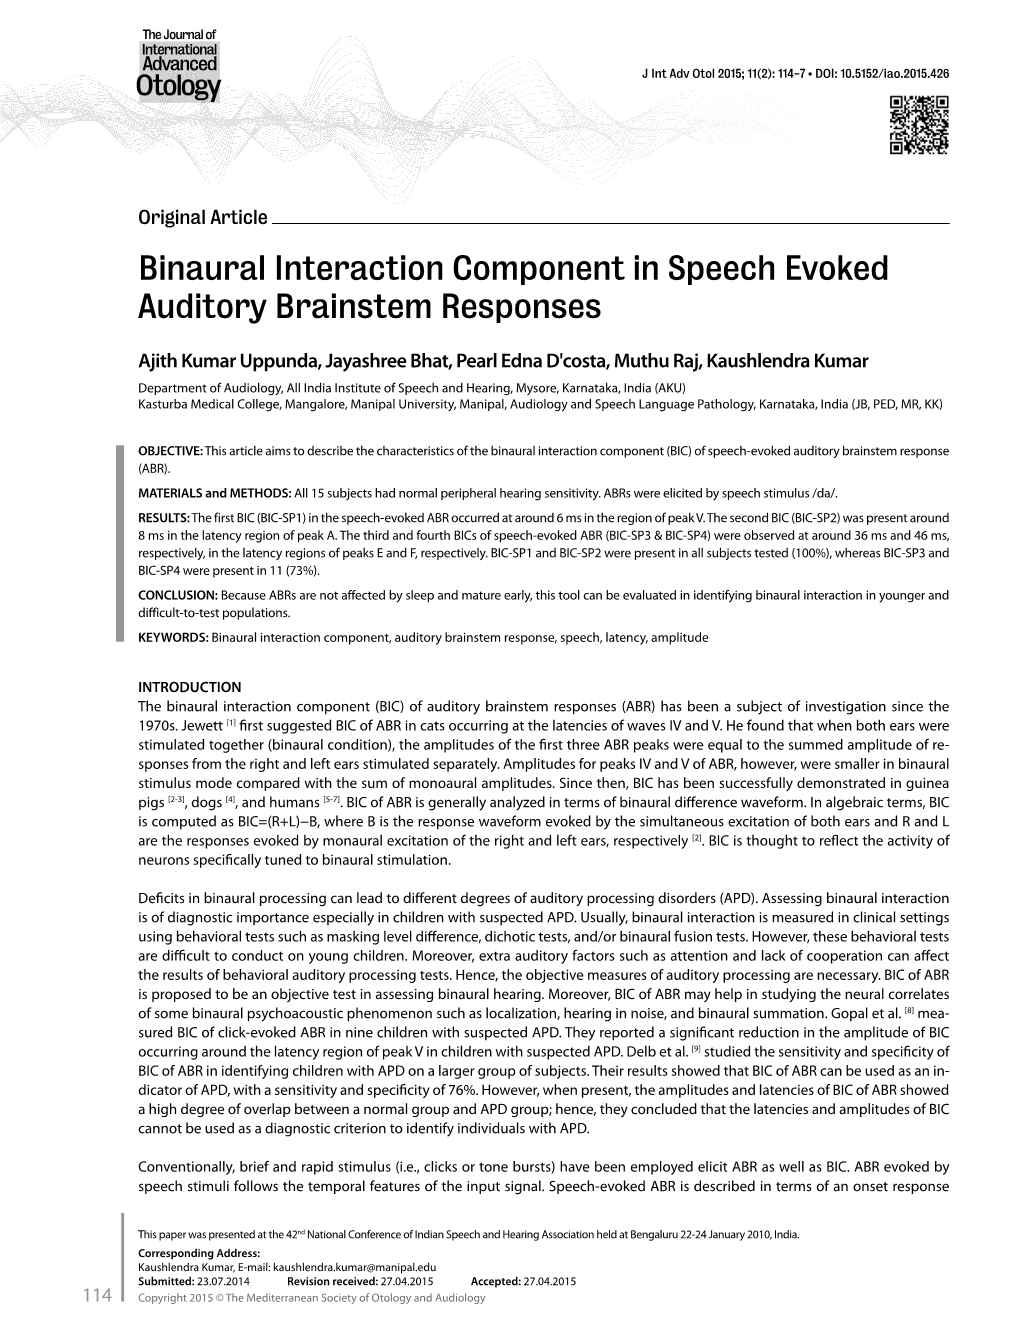 Binaural Interaction Component in Speech Evoked Auditory Brainstem Responses